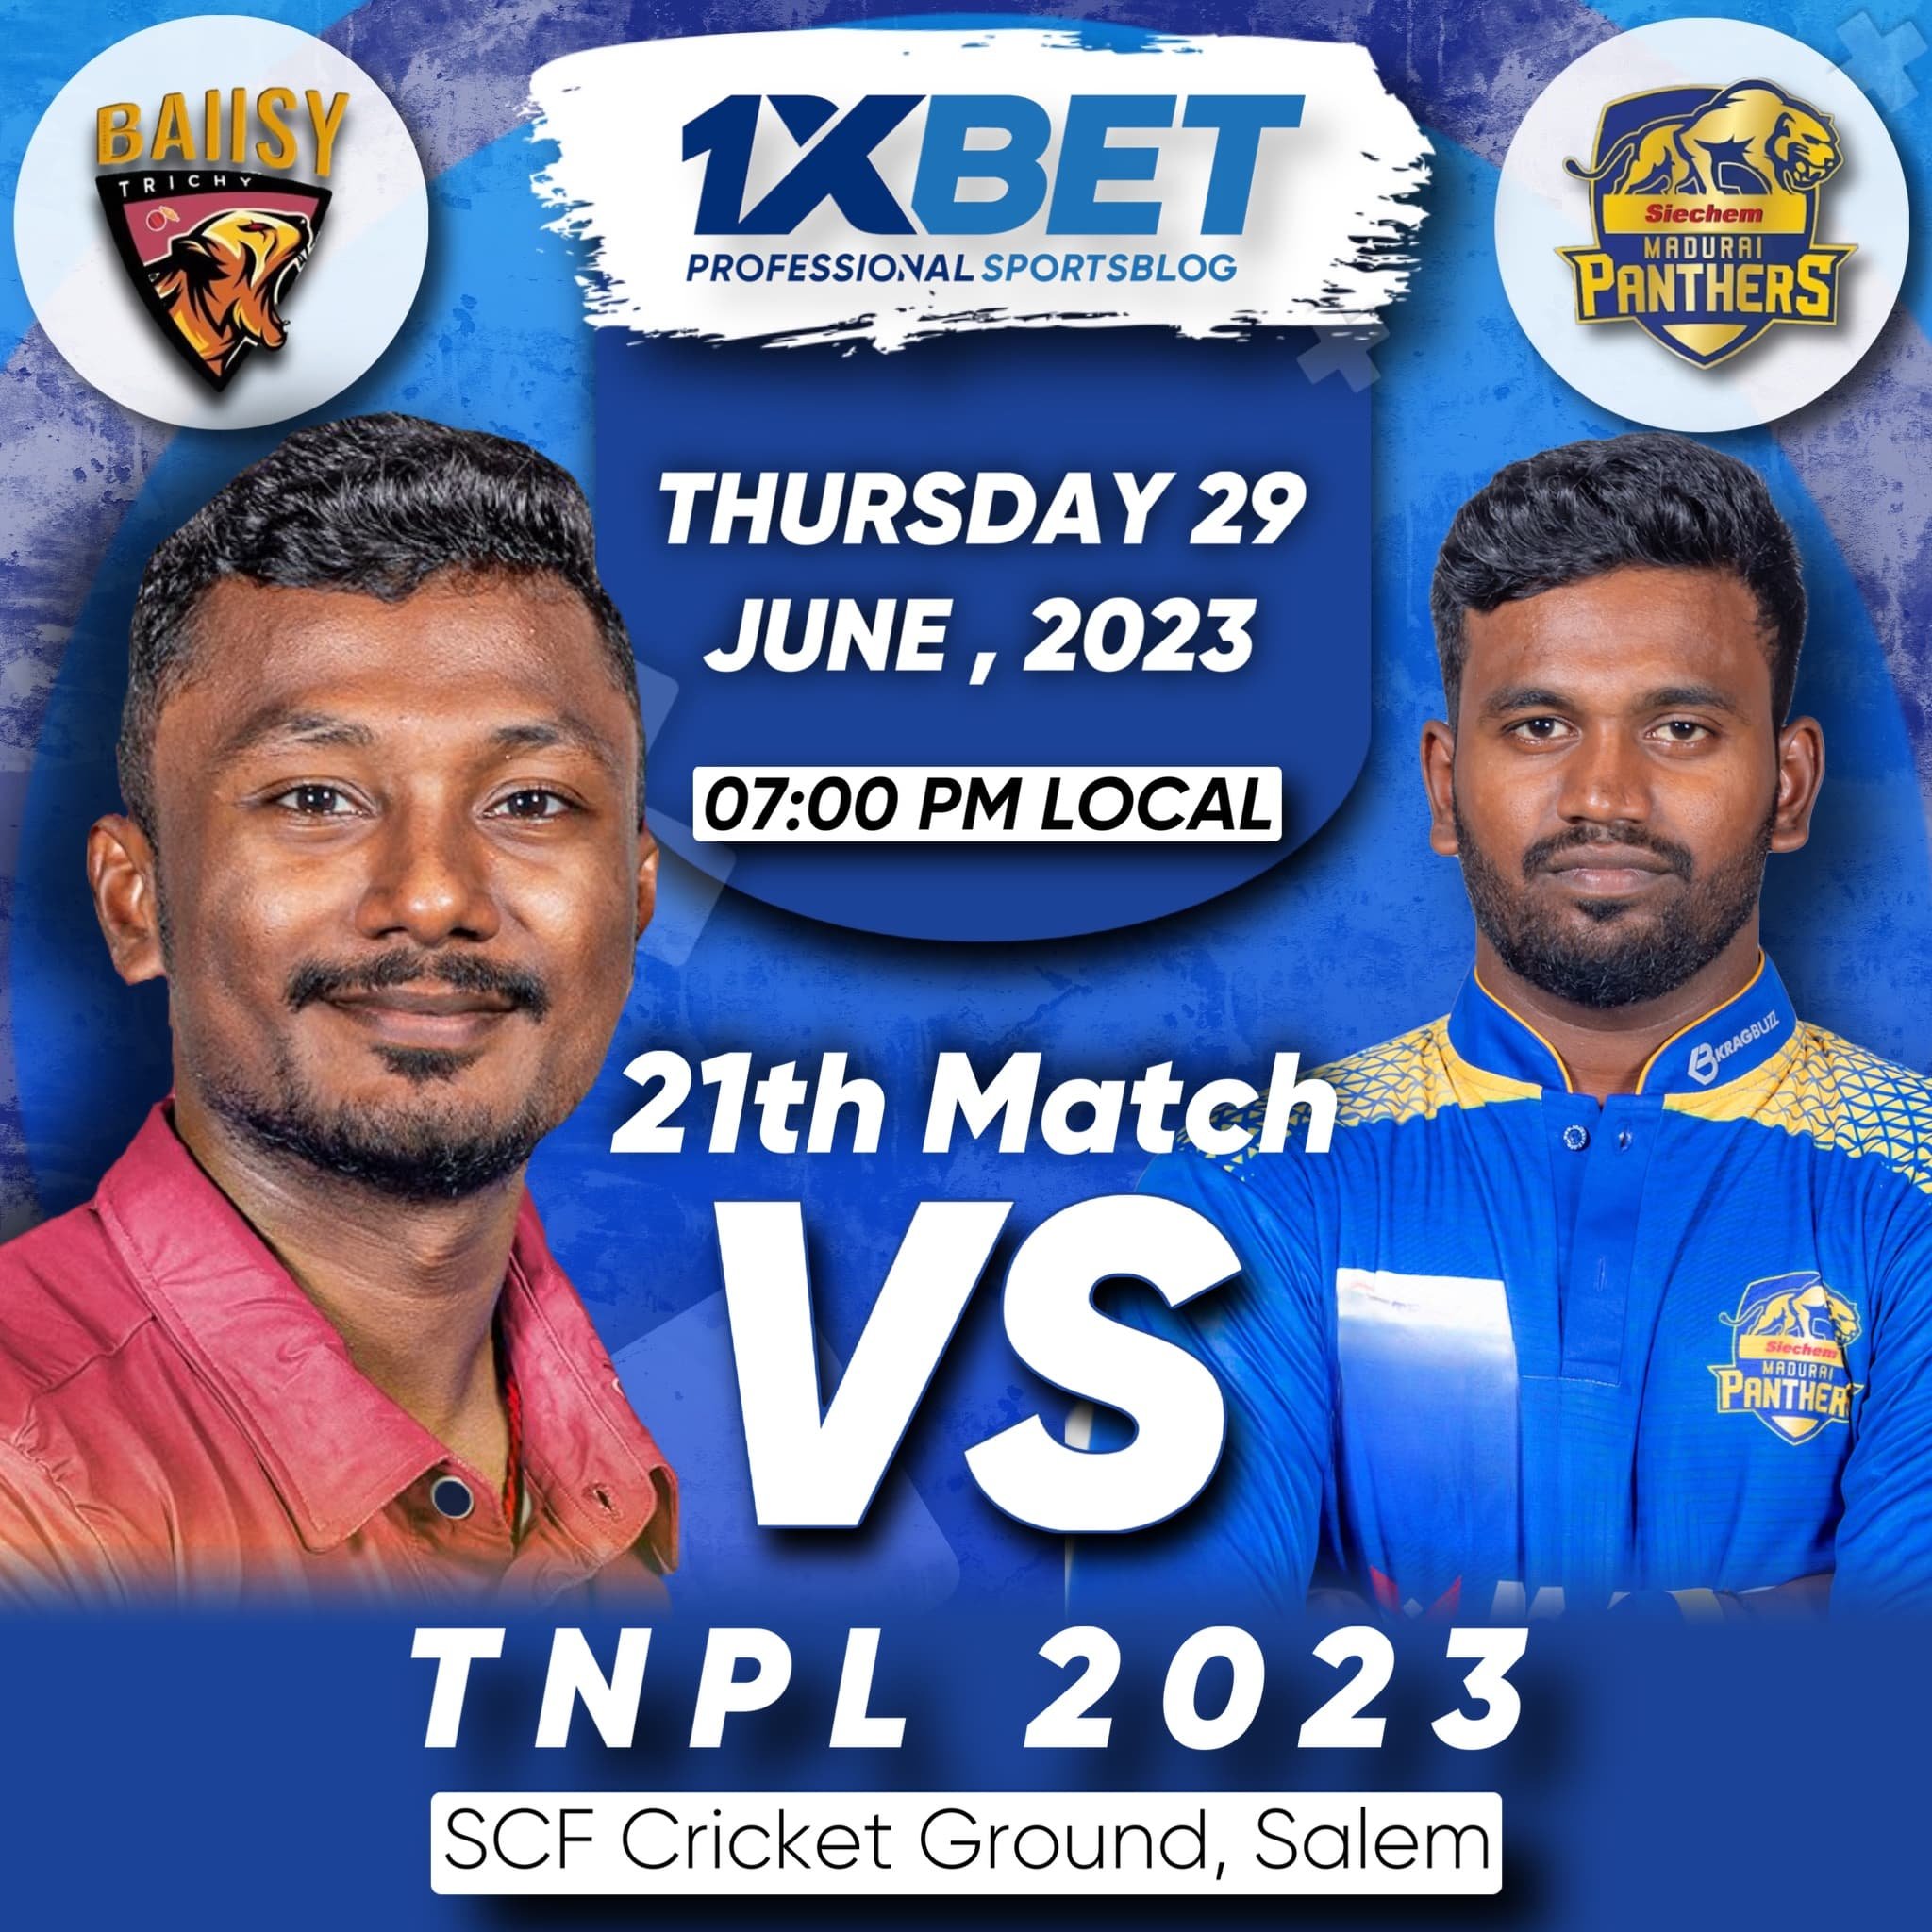 Siechem Madurai Panthers vs Ba11sy Trichy, TNPL 2023, 21st Match Analysis